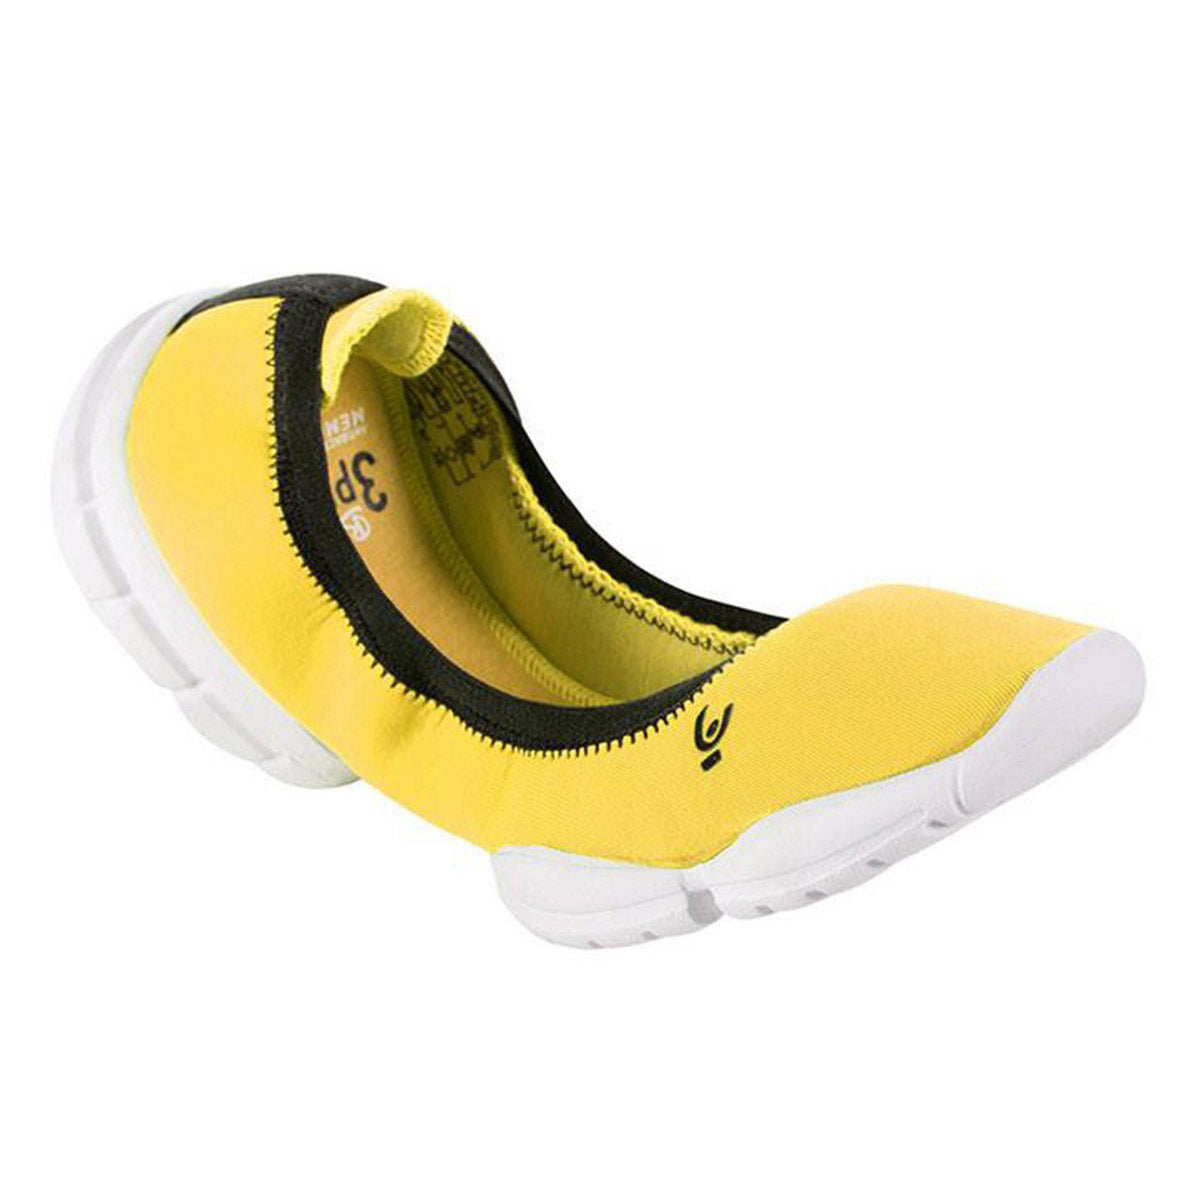 Freddy Yellow 3D Pro Ballerina Shoe